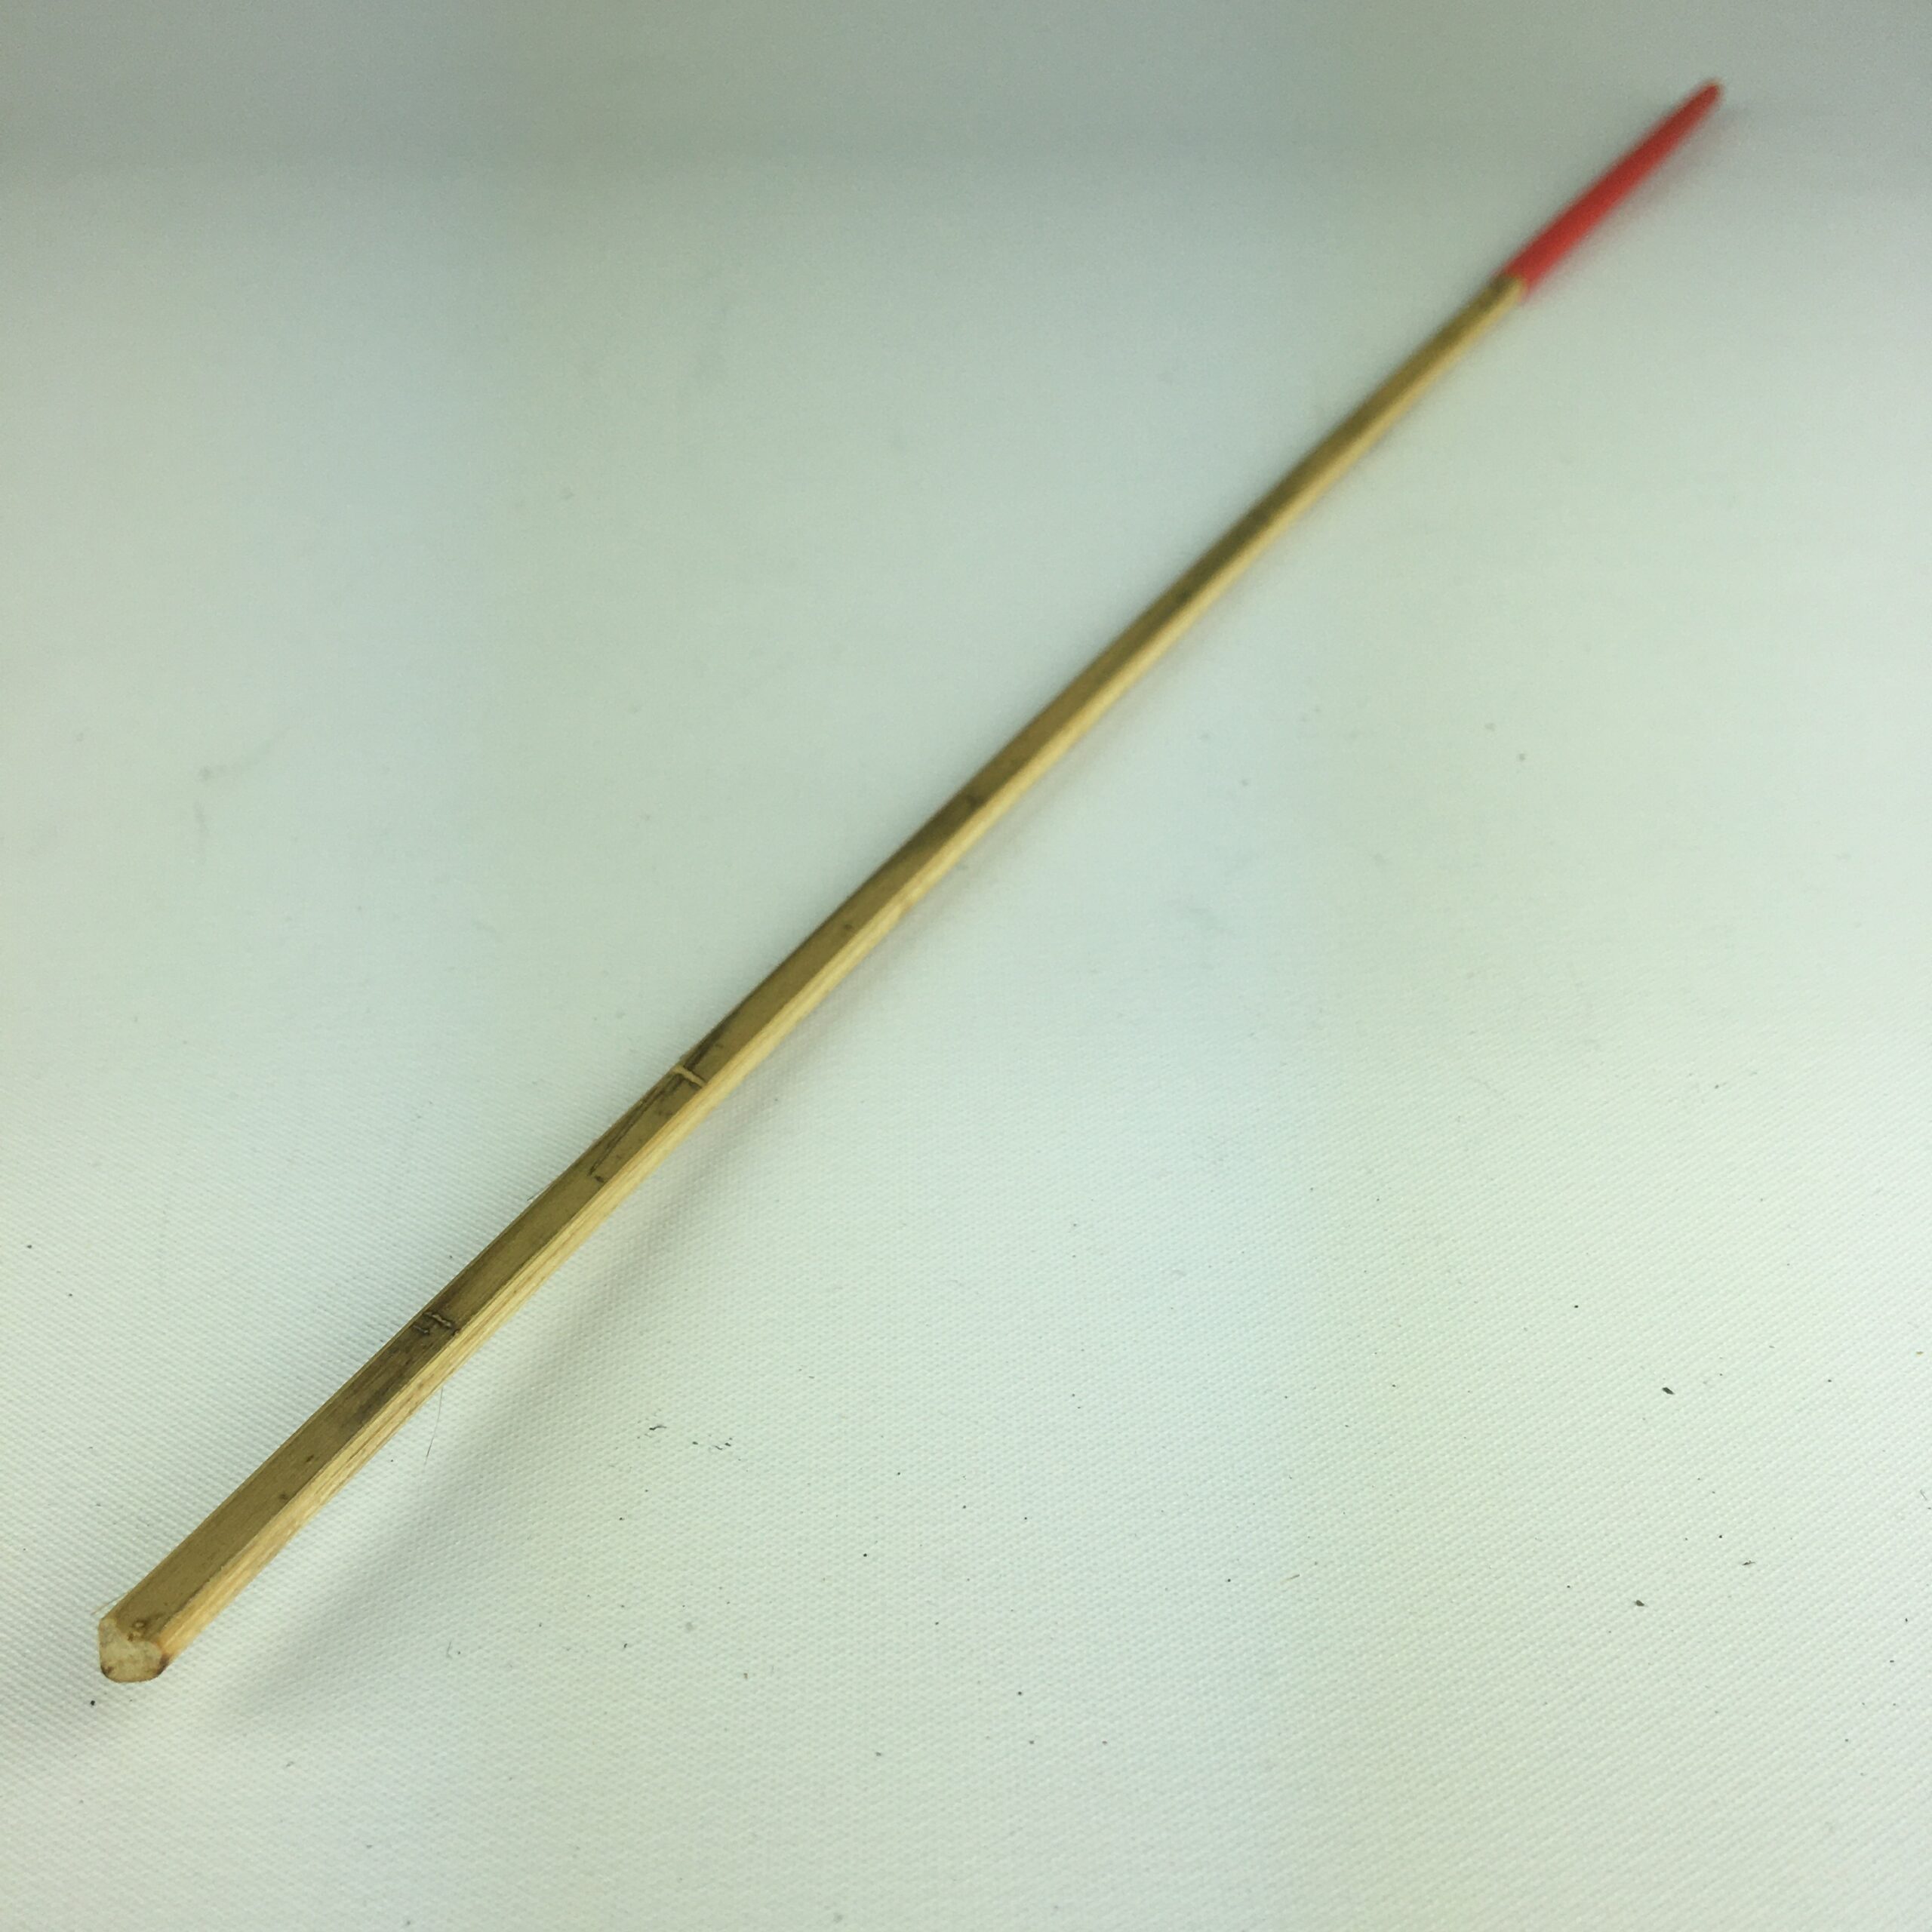 Gope bamboo bacalhau stick for zabumba